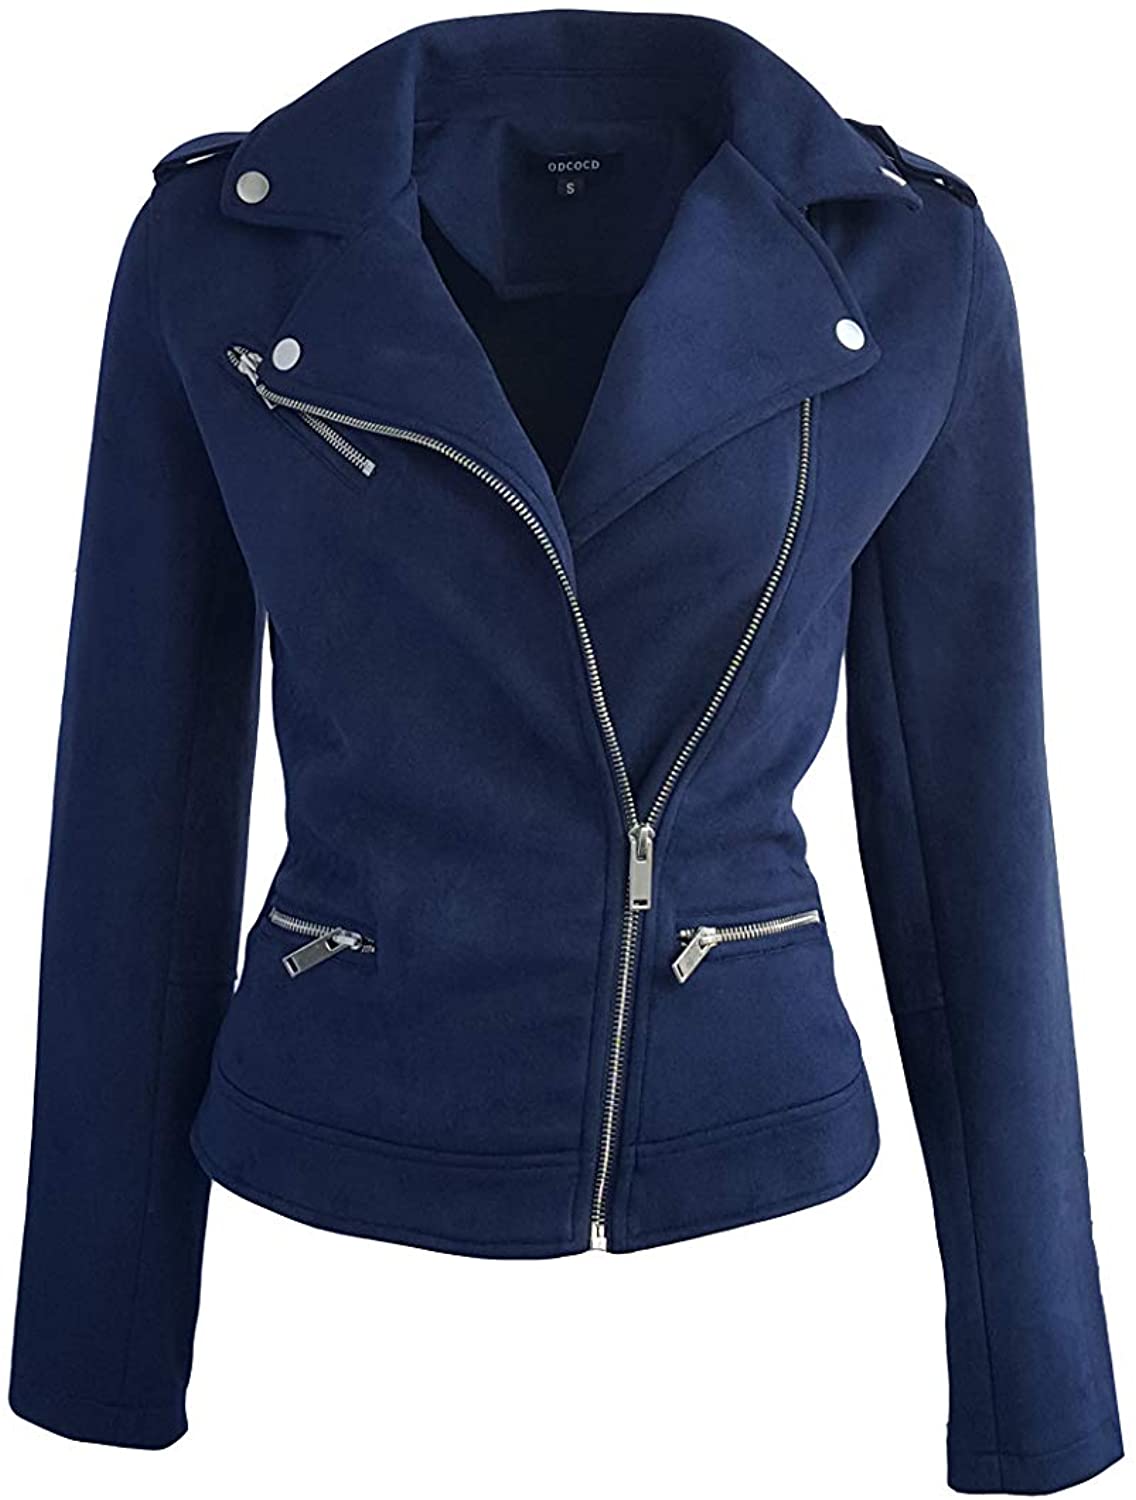 ODCOCD Faux Suede Jacket for Women Long Sleeve Zipper Up Casual Outwear ...